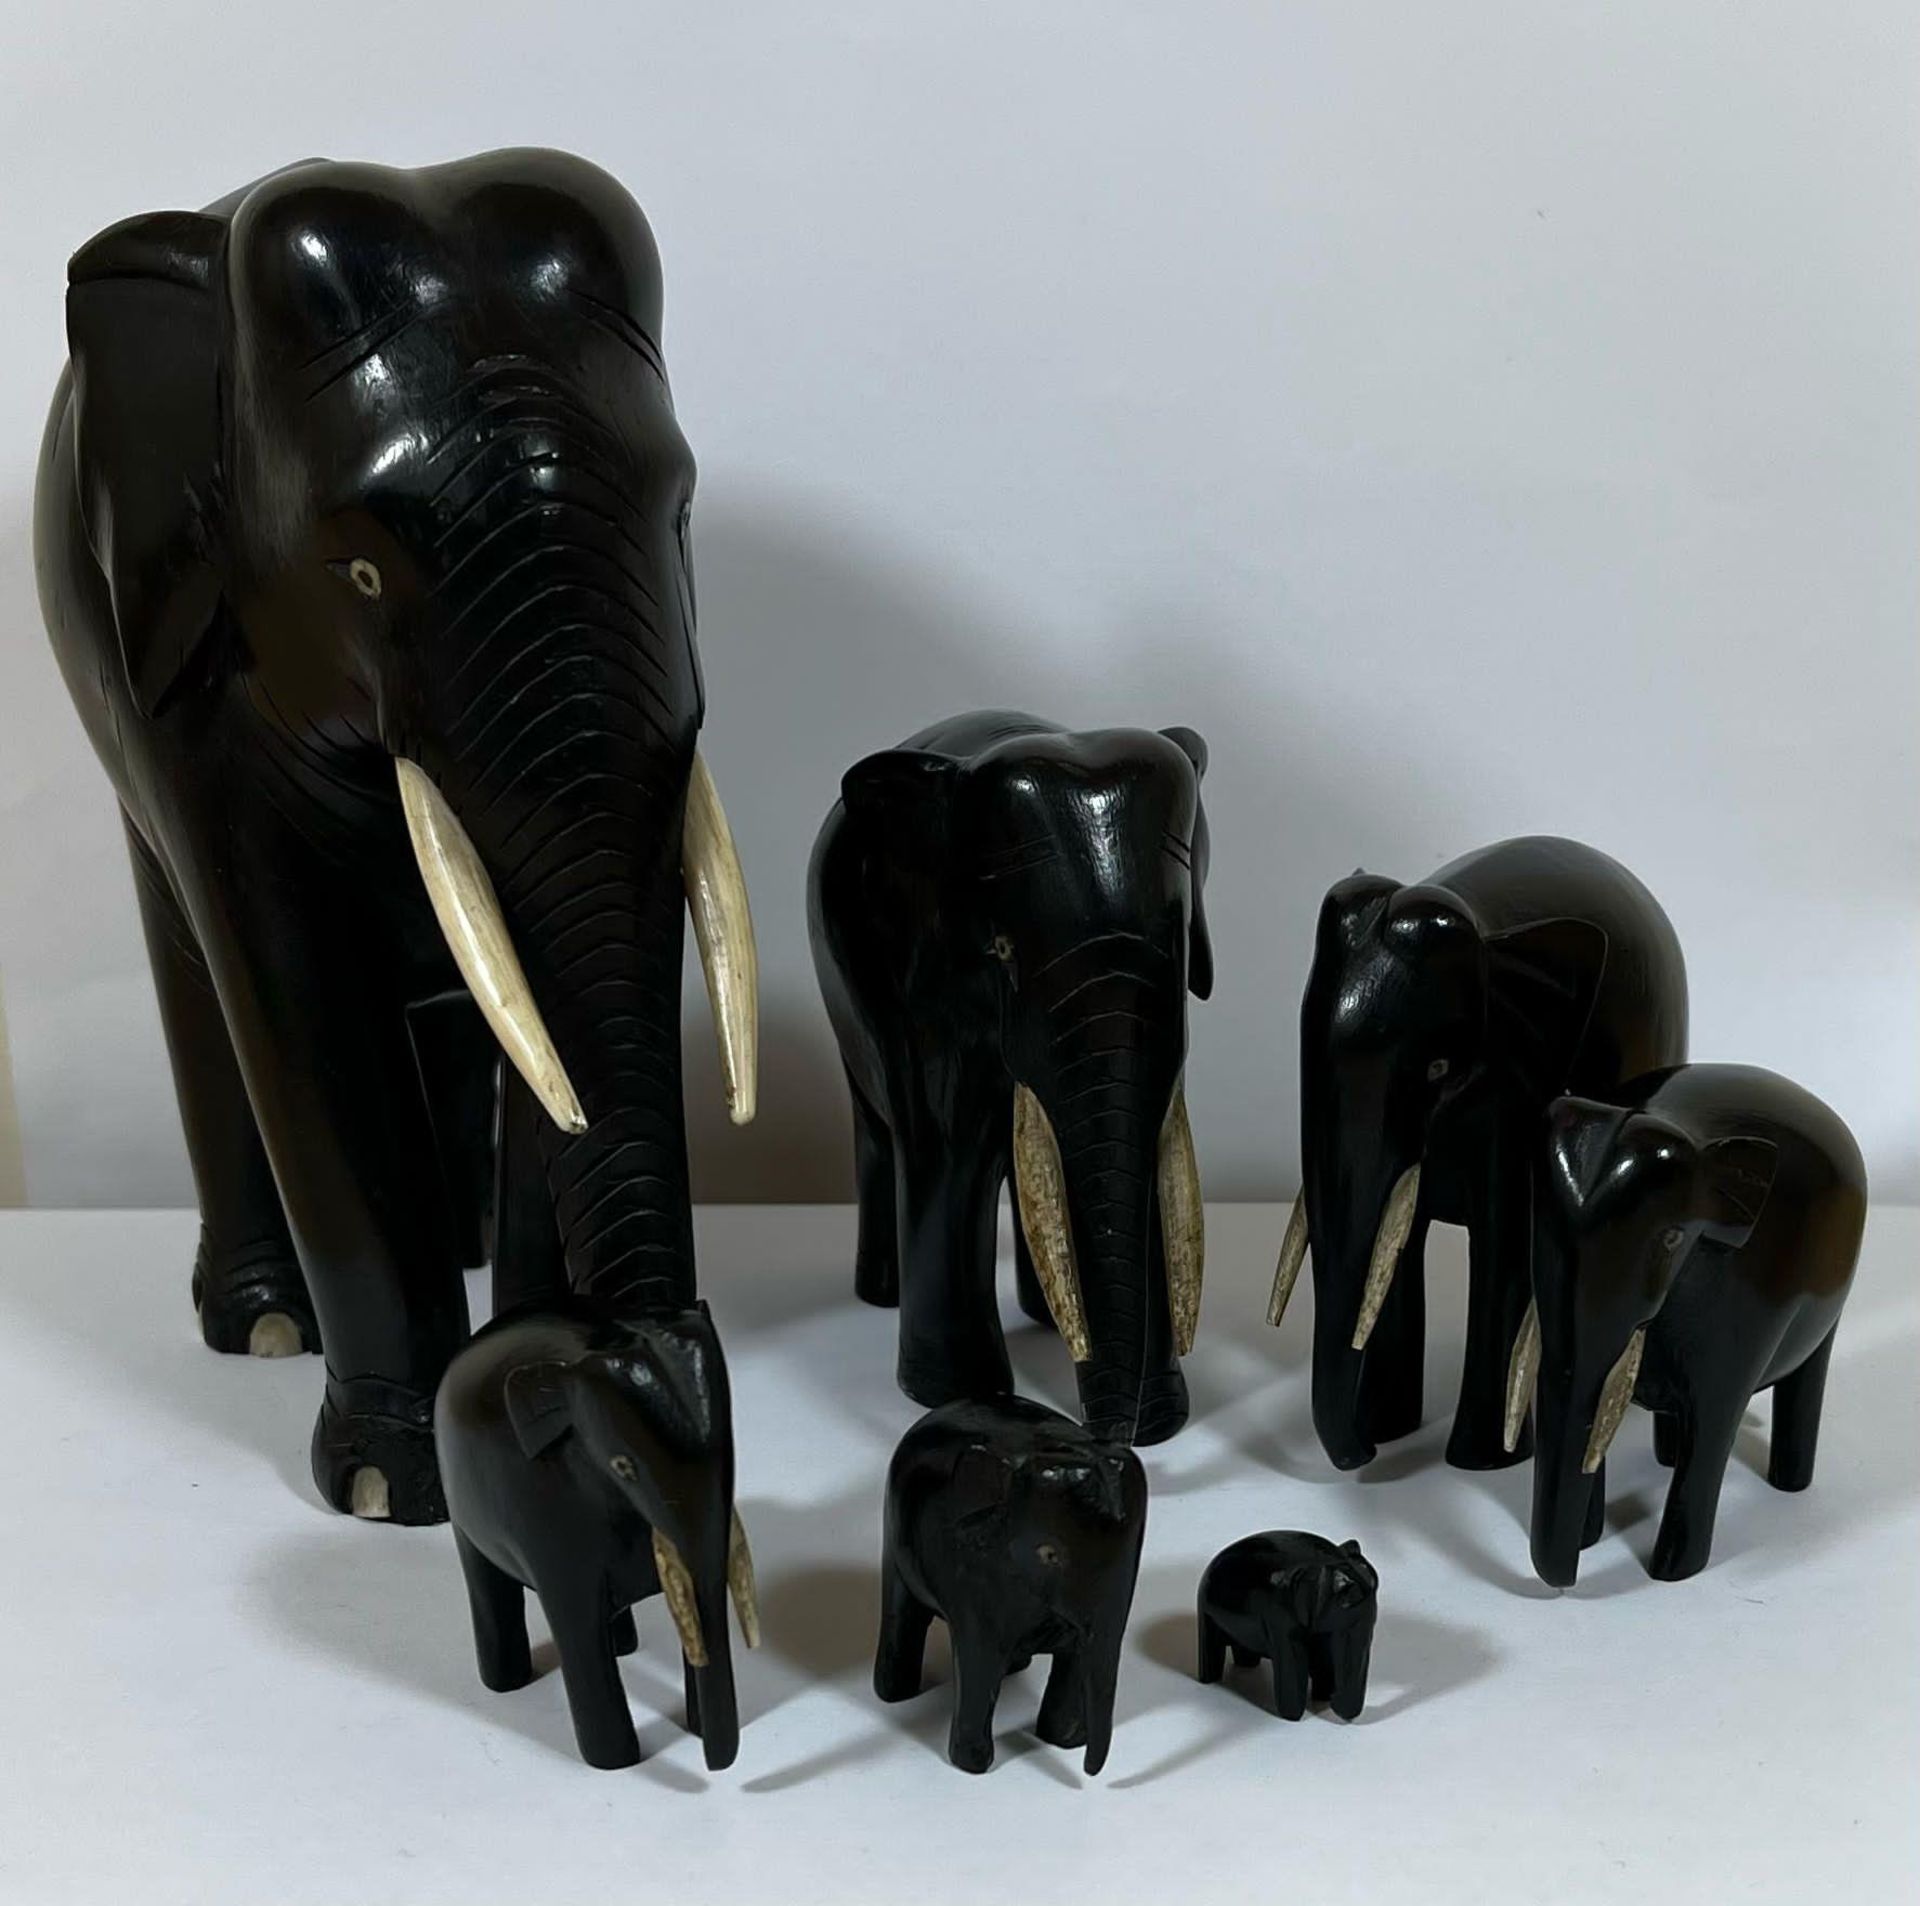 AN ANTIQUE FAMILY OF SEVEN GRADUATED EBONY ELEPHANTS, LARGEST 16CM, SMALLEST 1.5CM - Image 3 of 4